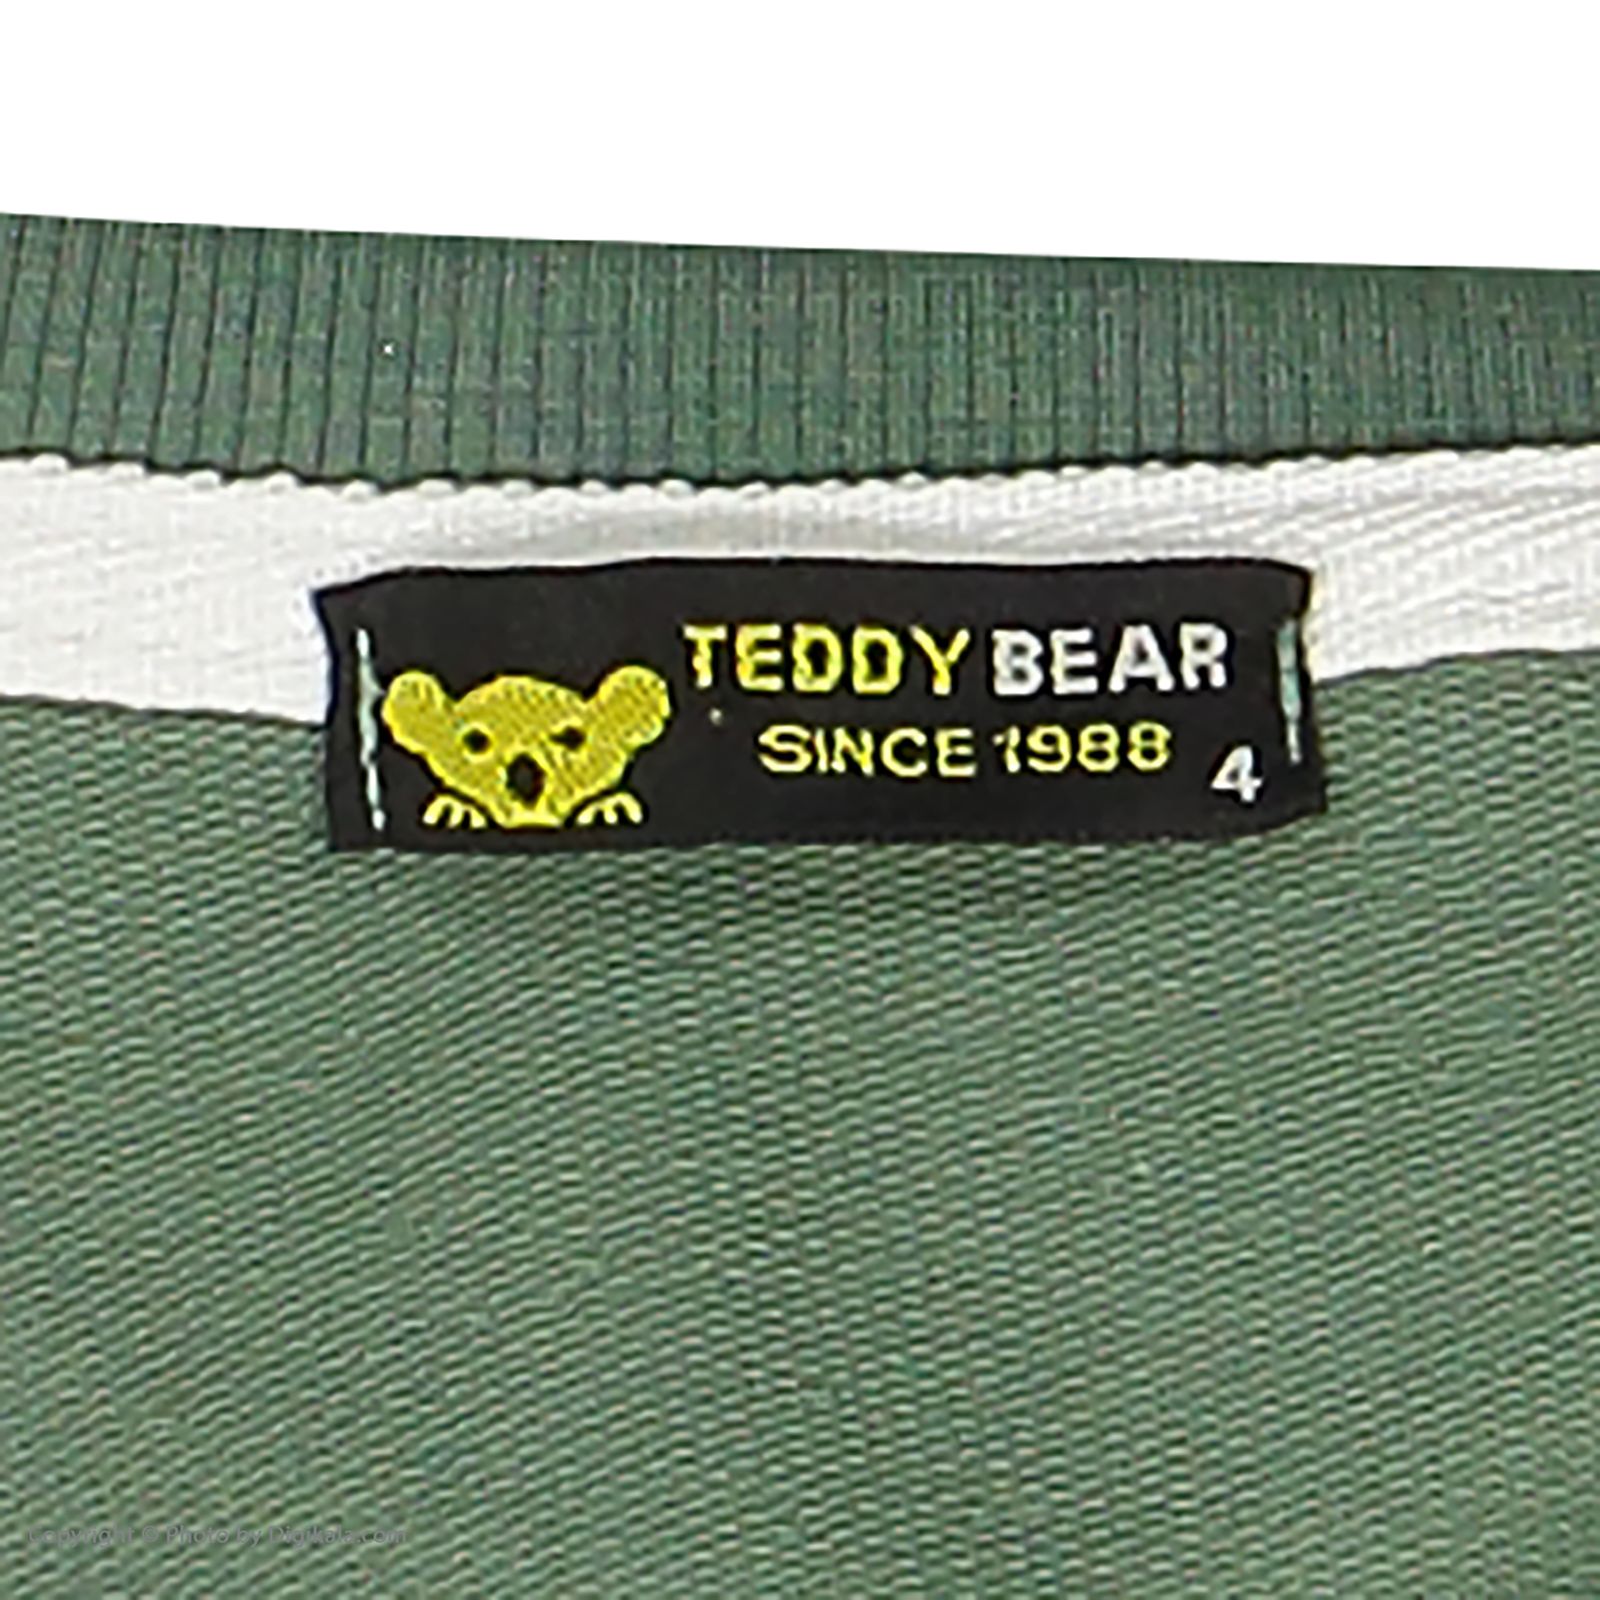 سویشرت پسرانه خرس کوچولو مدل 2011169-46 -  - 5